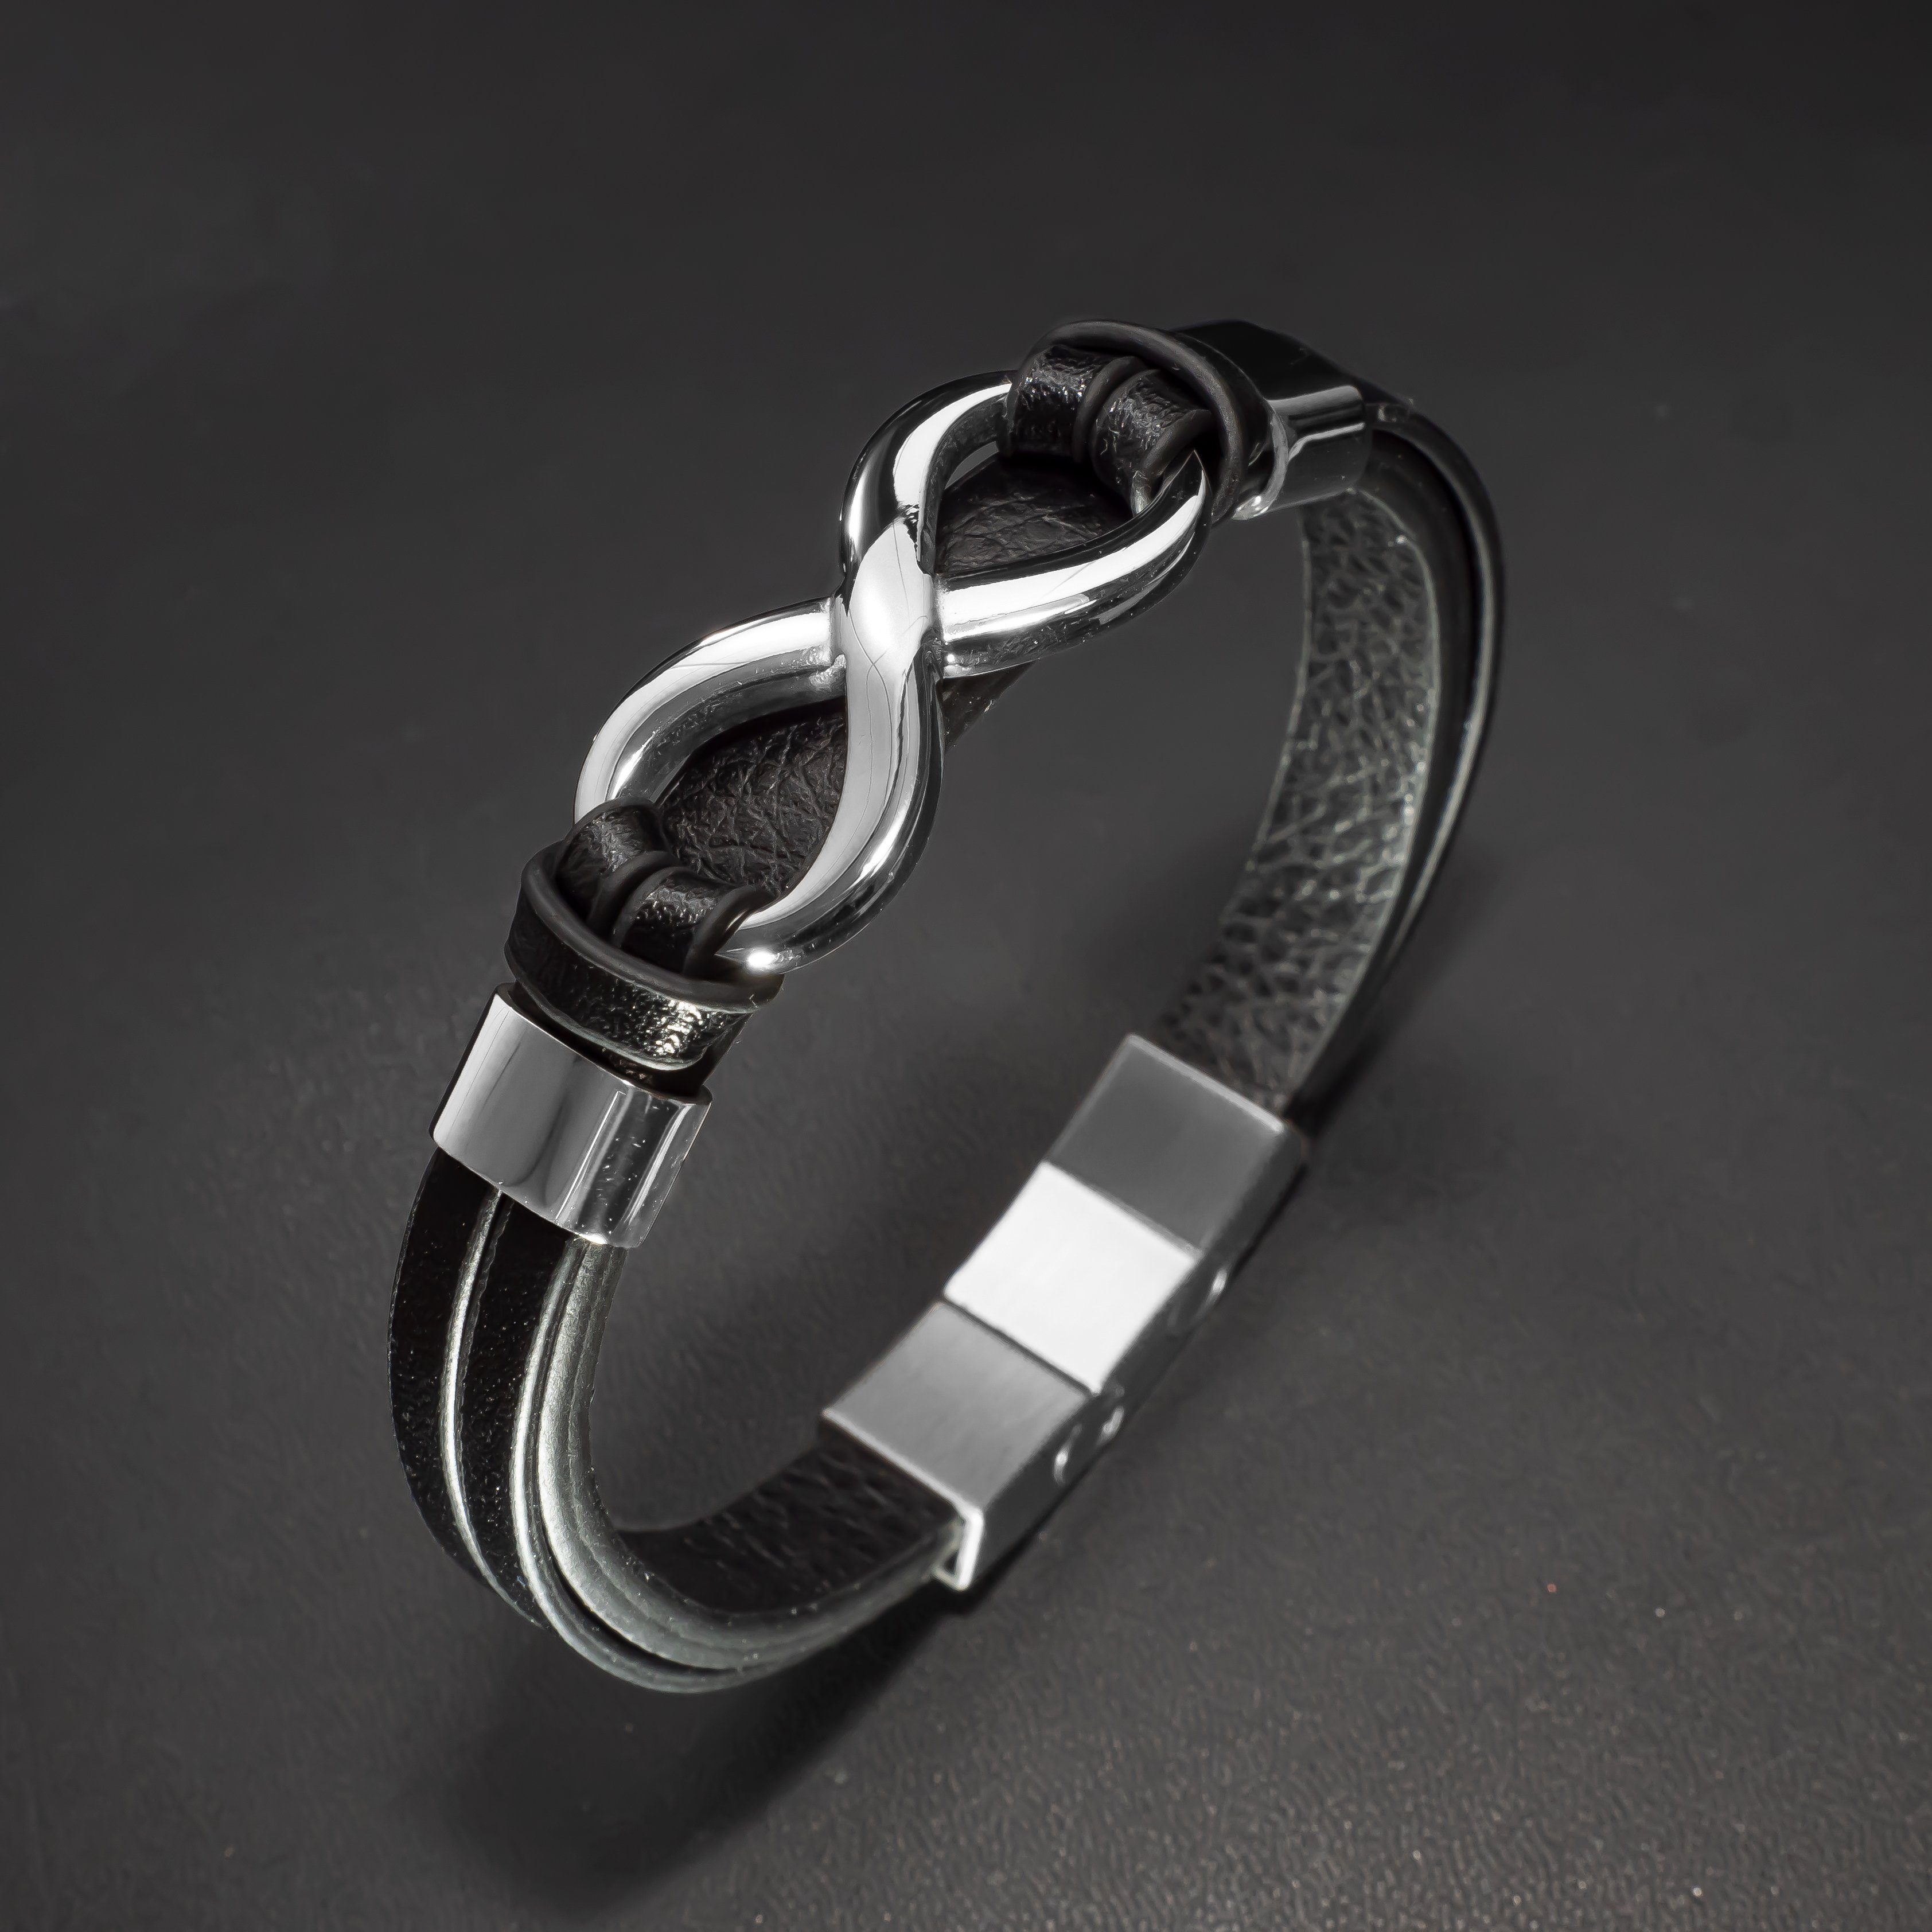 Designed Casual "INFINITY" Unendlichkeit (Edelstahl, Leder Armband Silber Echtleder, Herren Style, Lederarmband in Germany UNIQAL.de Handgefertigt),